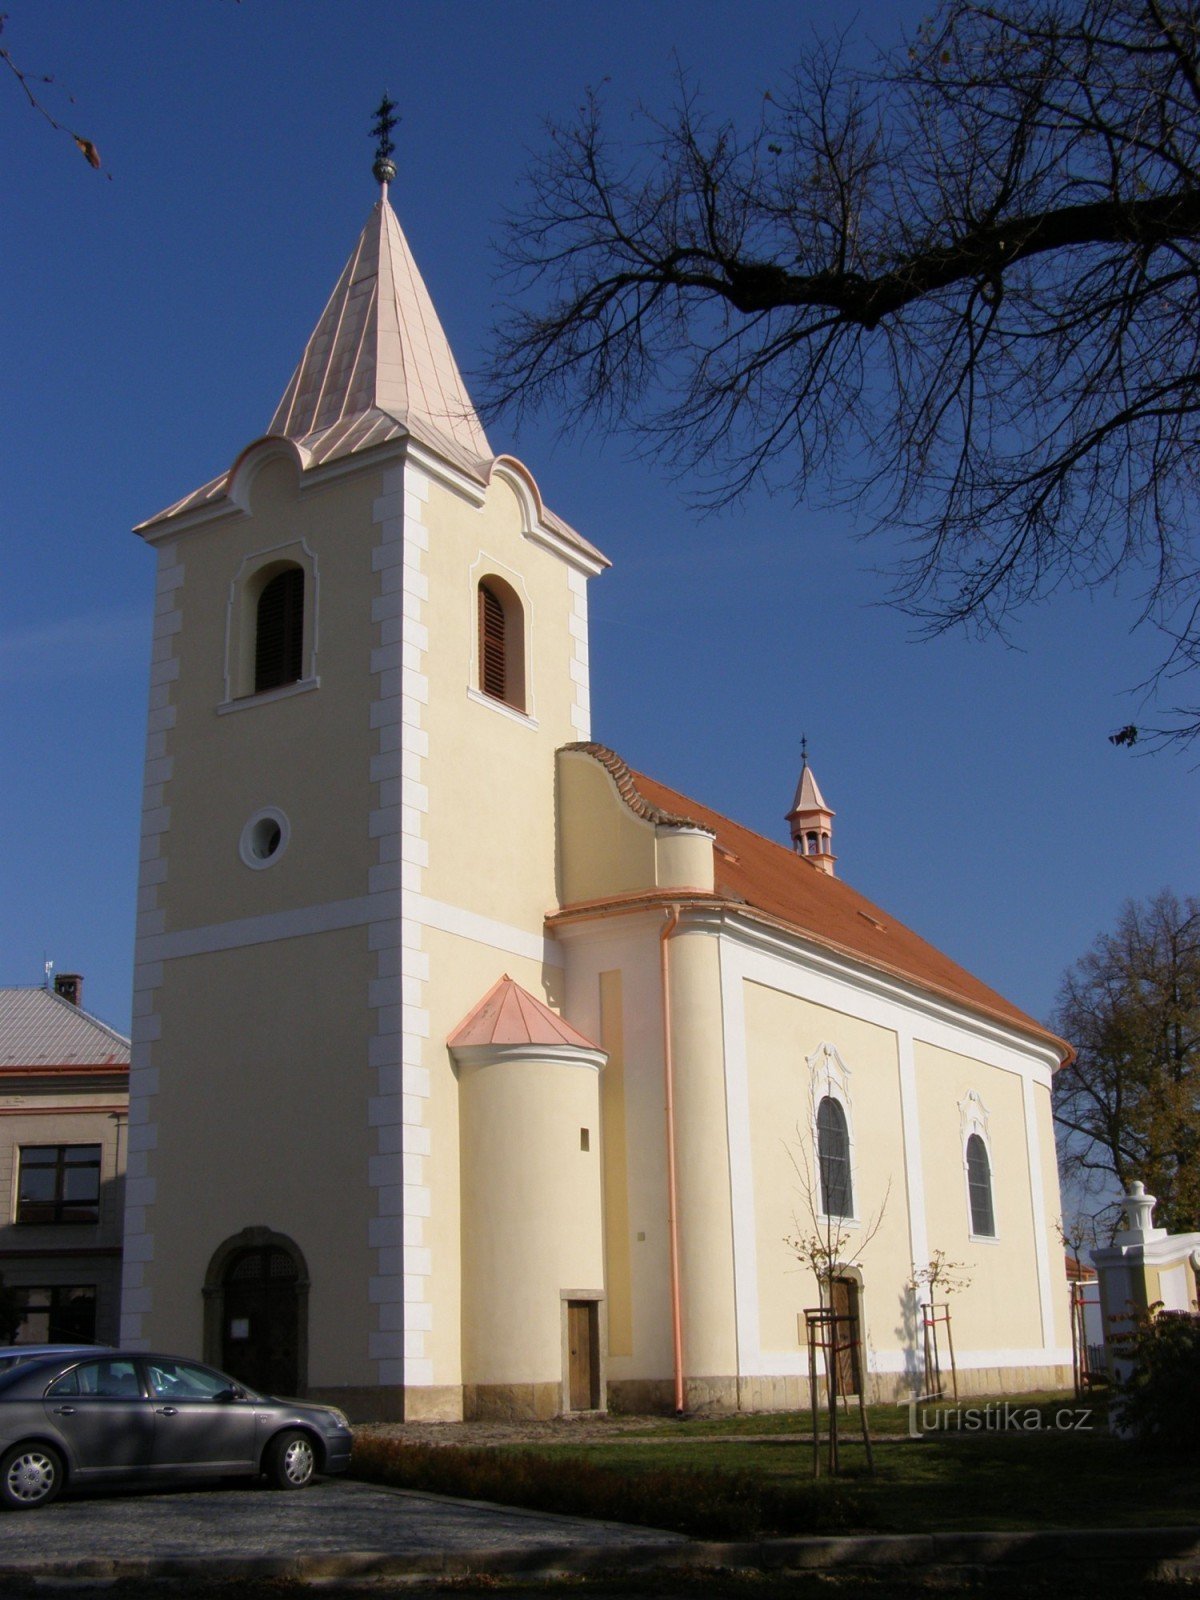 Týnec nad Labem - nhà thờ St. John the Baptist